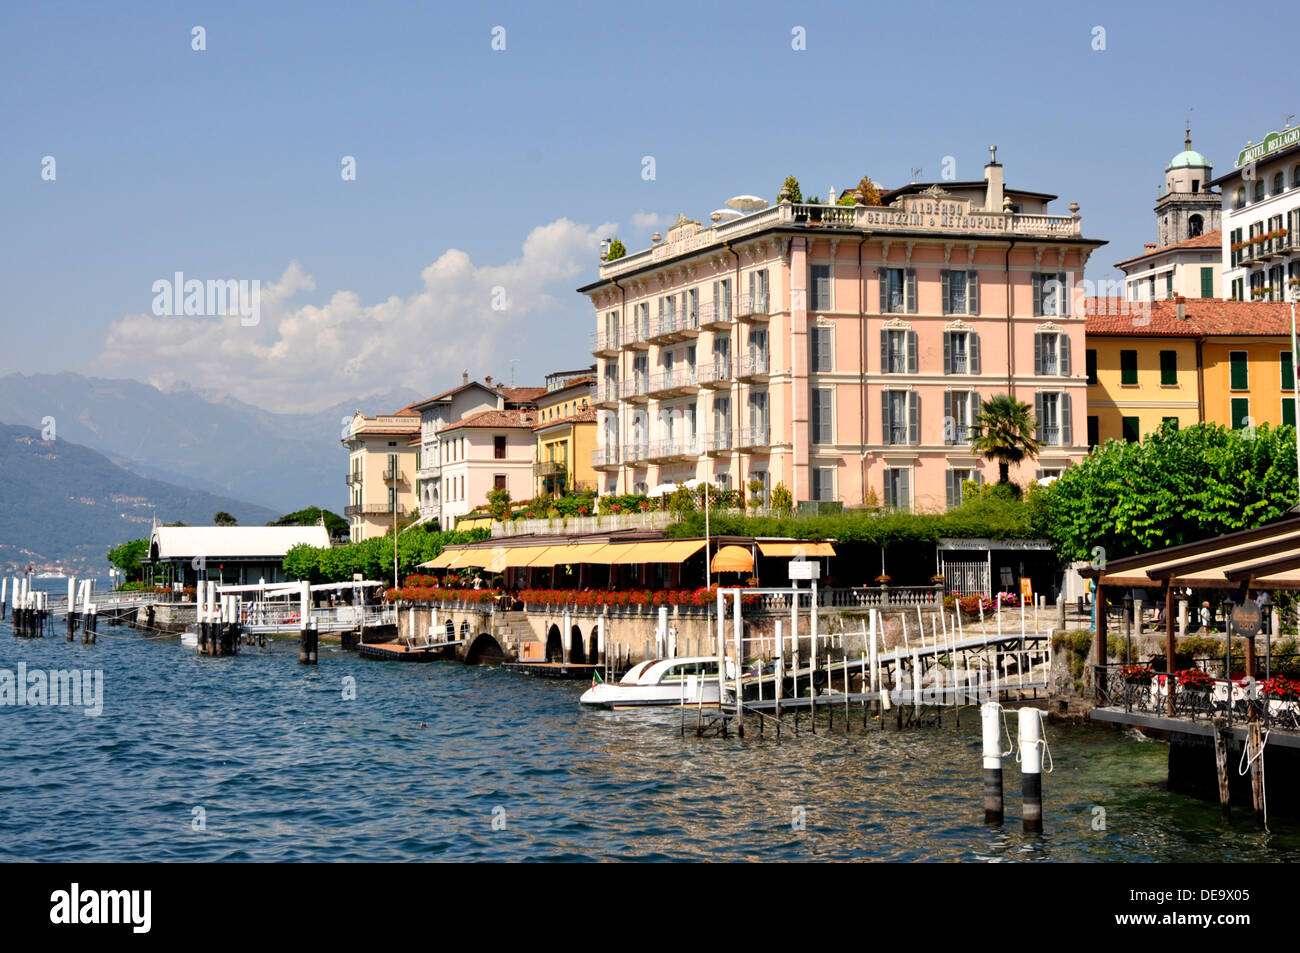 Italien - Comer See - Bellagio - Hotels - Restaurants - Cafés am Seeufer - bunten Balkonen schattigen Bäumen Sonnenlicht blauen Himmel Stockfoto